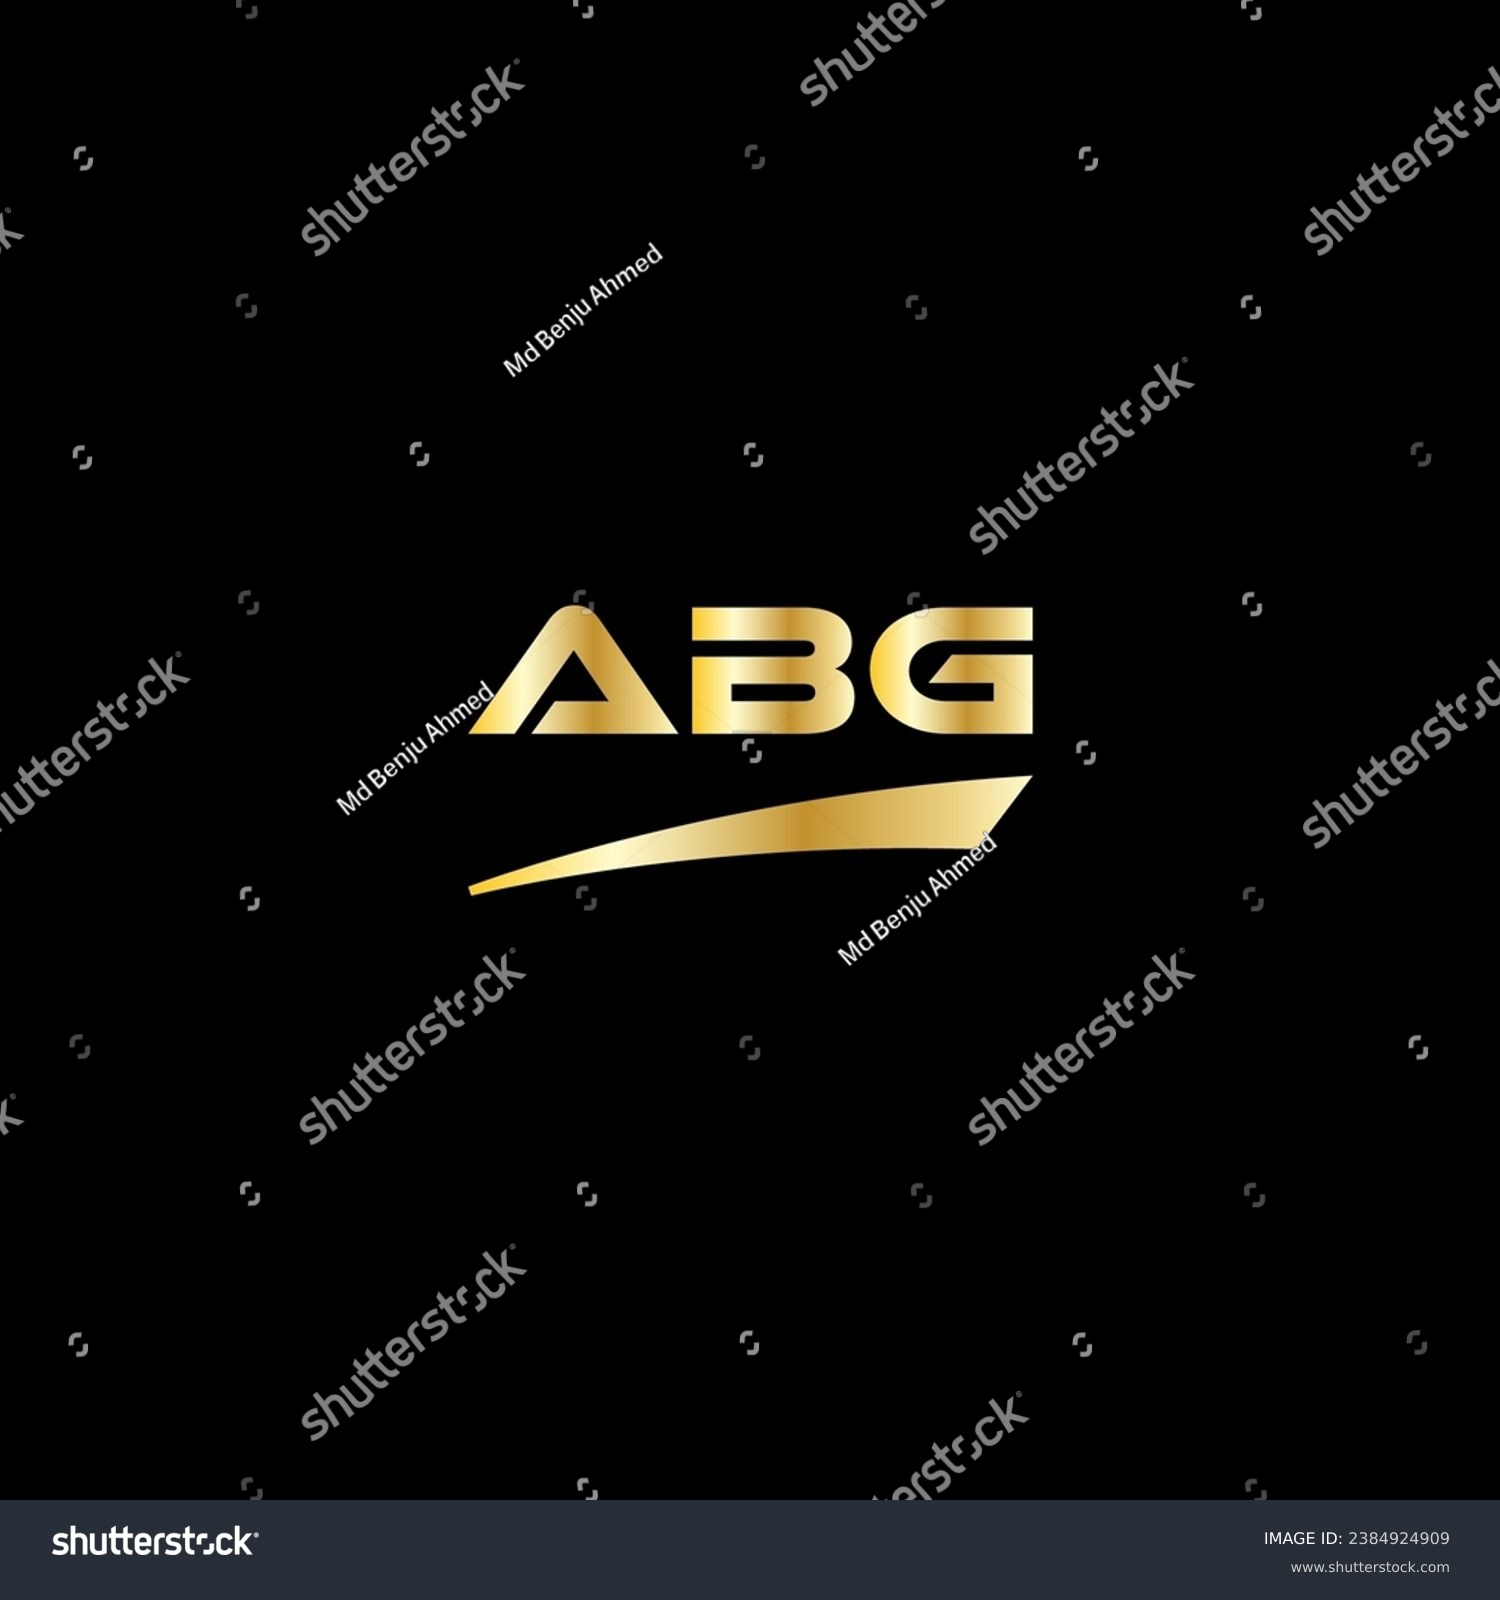 SVG of ABG initial letter logo on black background with gold color. modern font, minimal, 3 letter logo, clean, eps file for website, business, corporate company. ABG modern logo templet in illustrator. svg